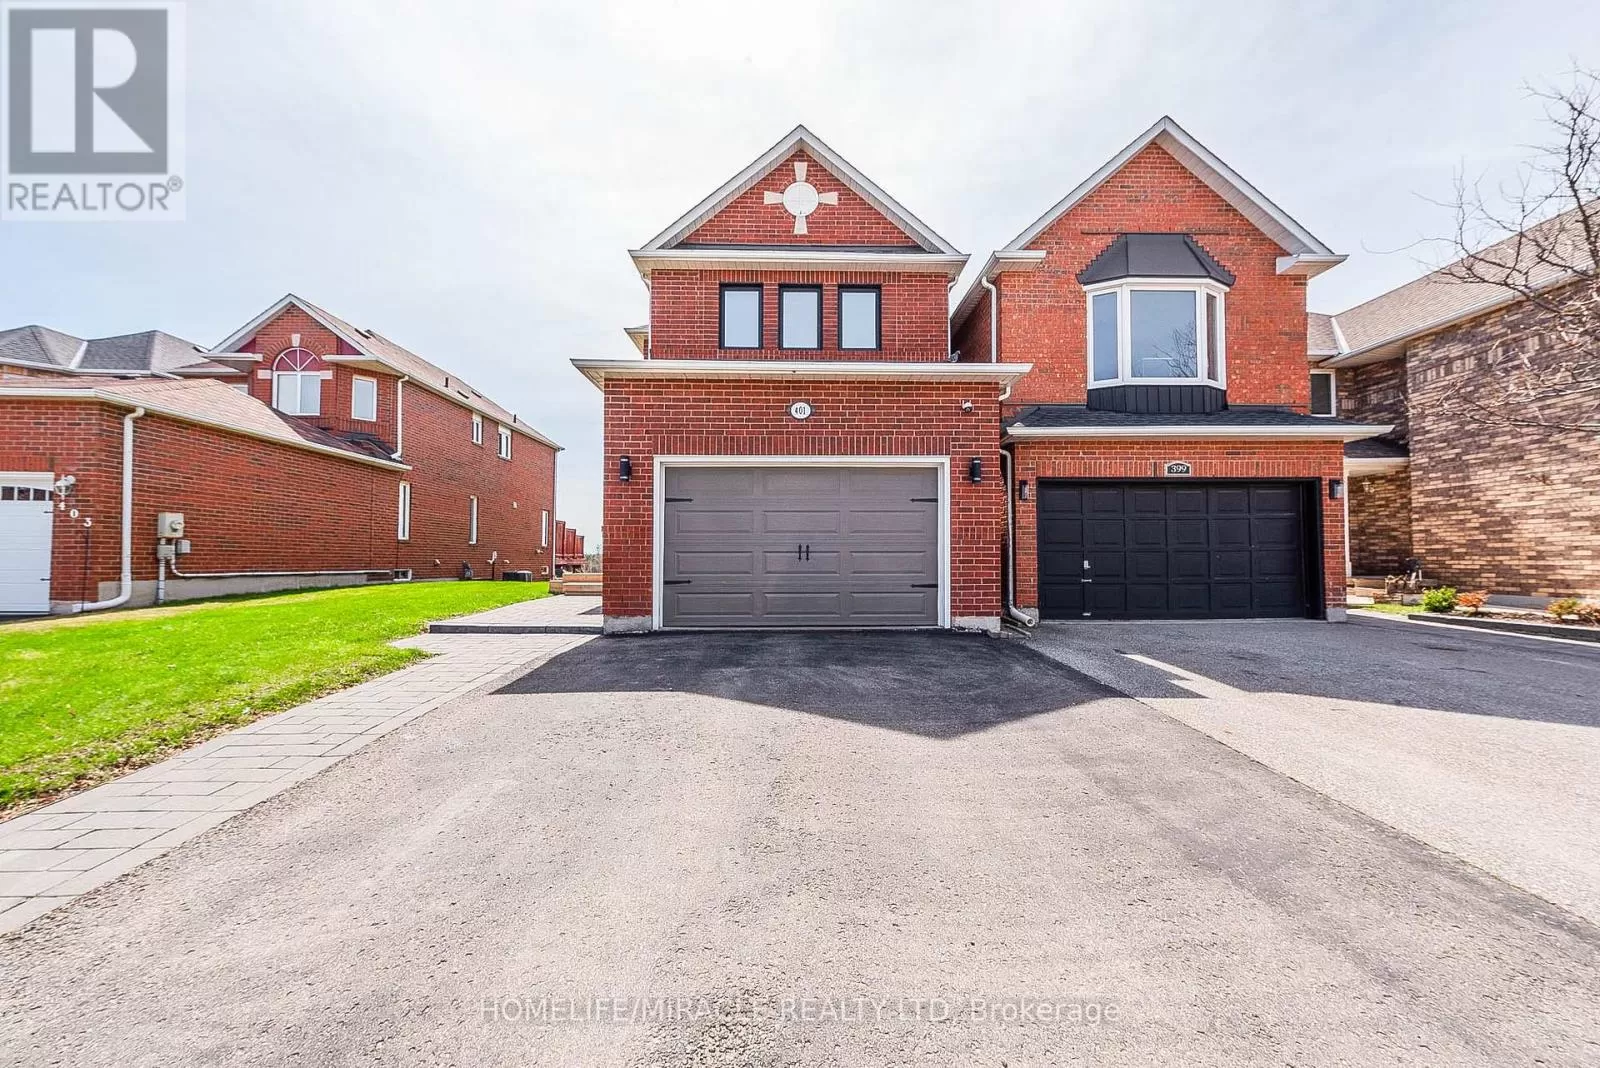 House for rent: 401 Jay Cres, Orangeville, Ontario L9W 4Z1